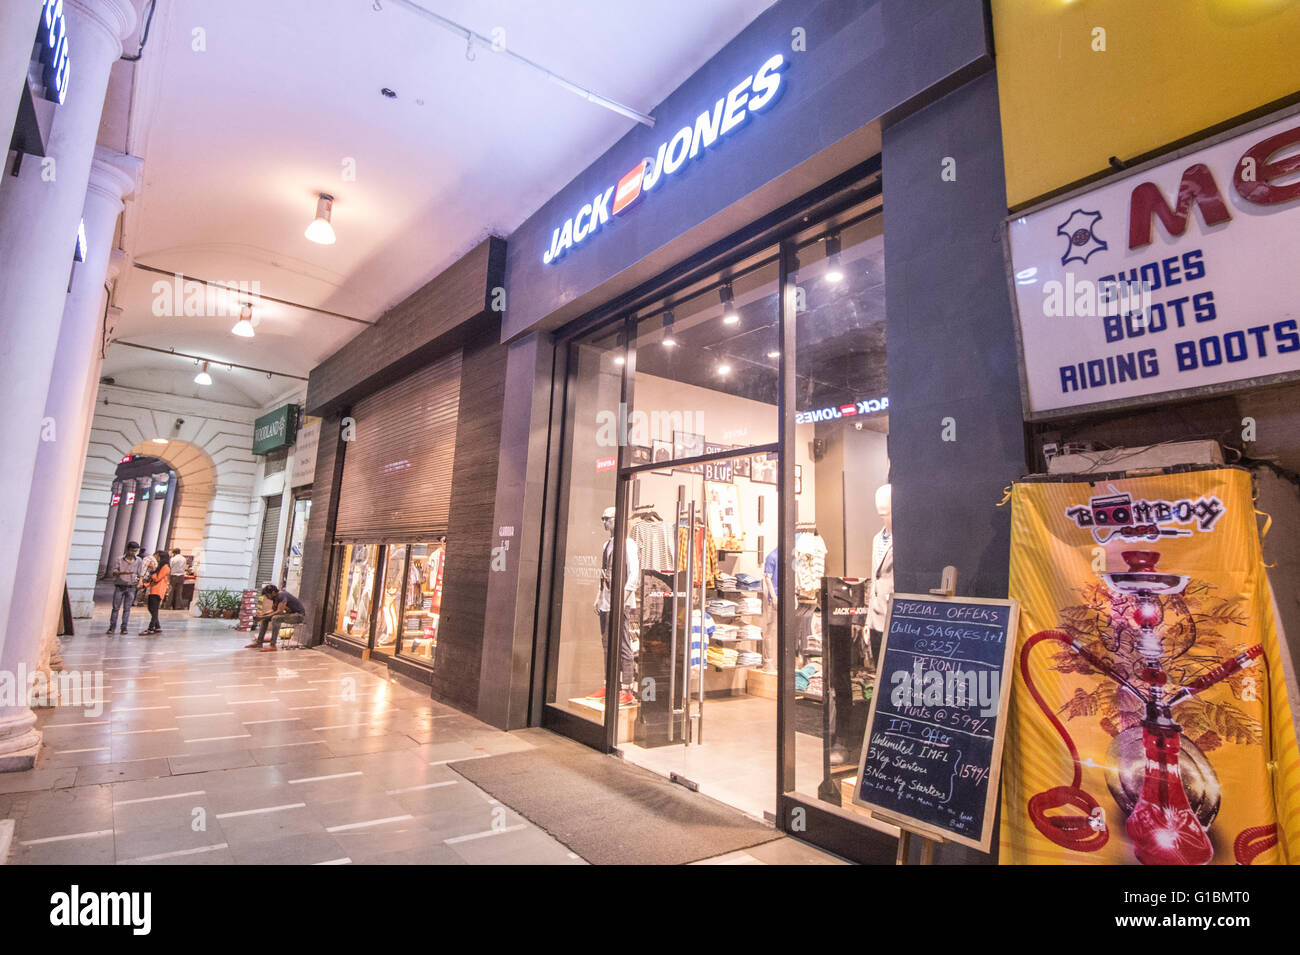 A general view of retail shop chain Jack Jones in Delhi, India. Credit:  Euan Cherry Stock Photo - Alamy